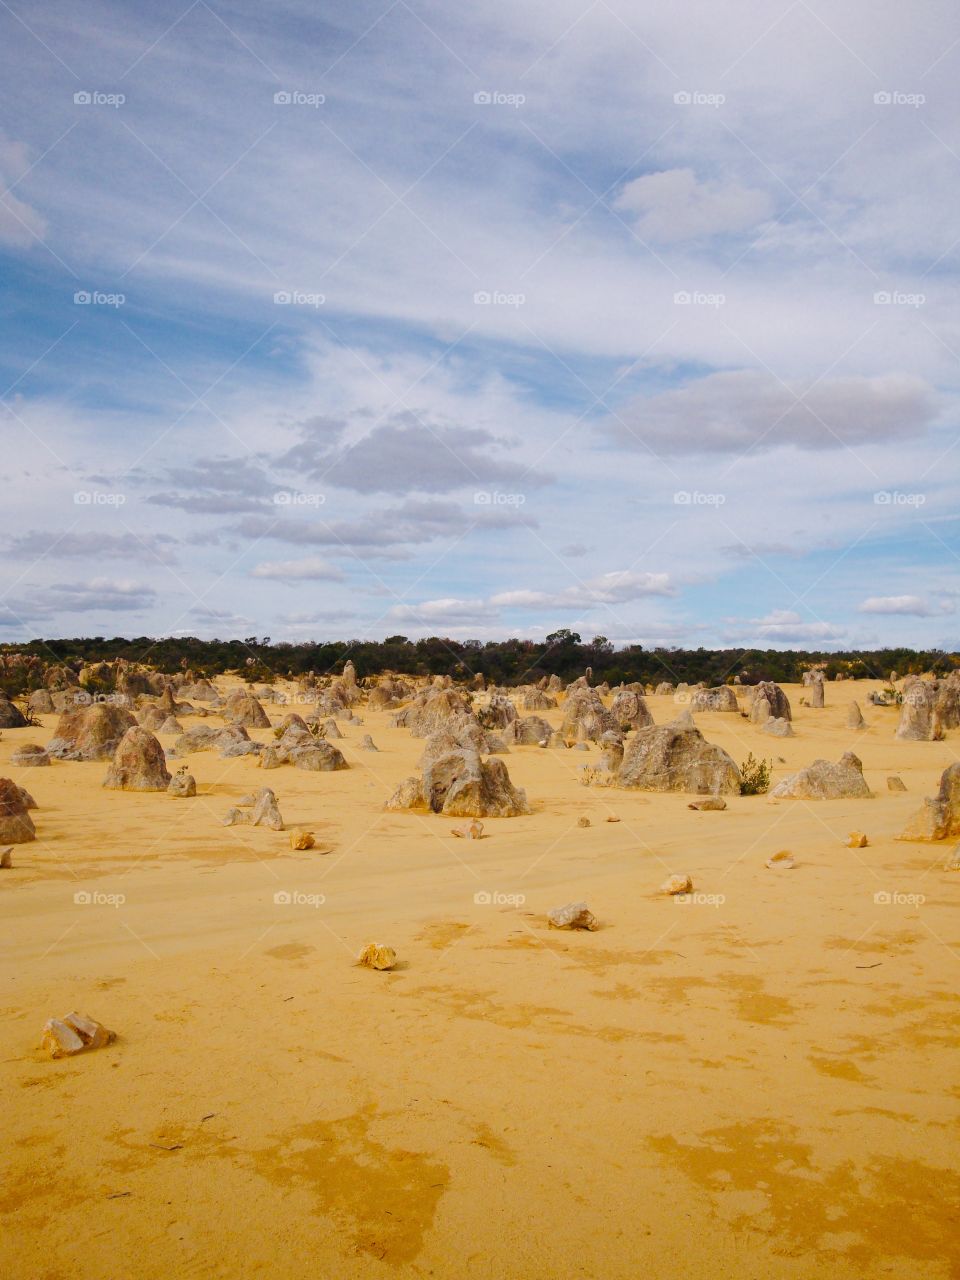 The Pinnacles Desert in Nambung, Western Australia.